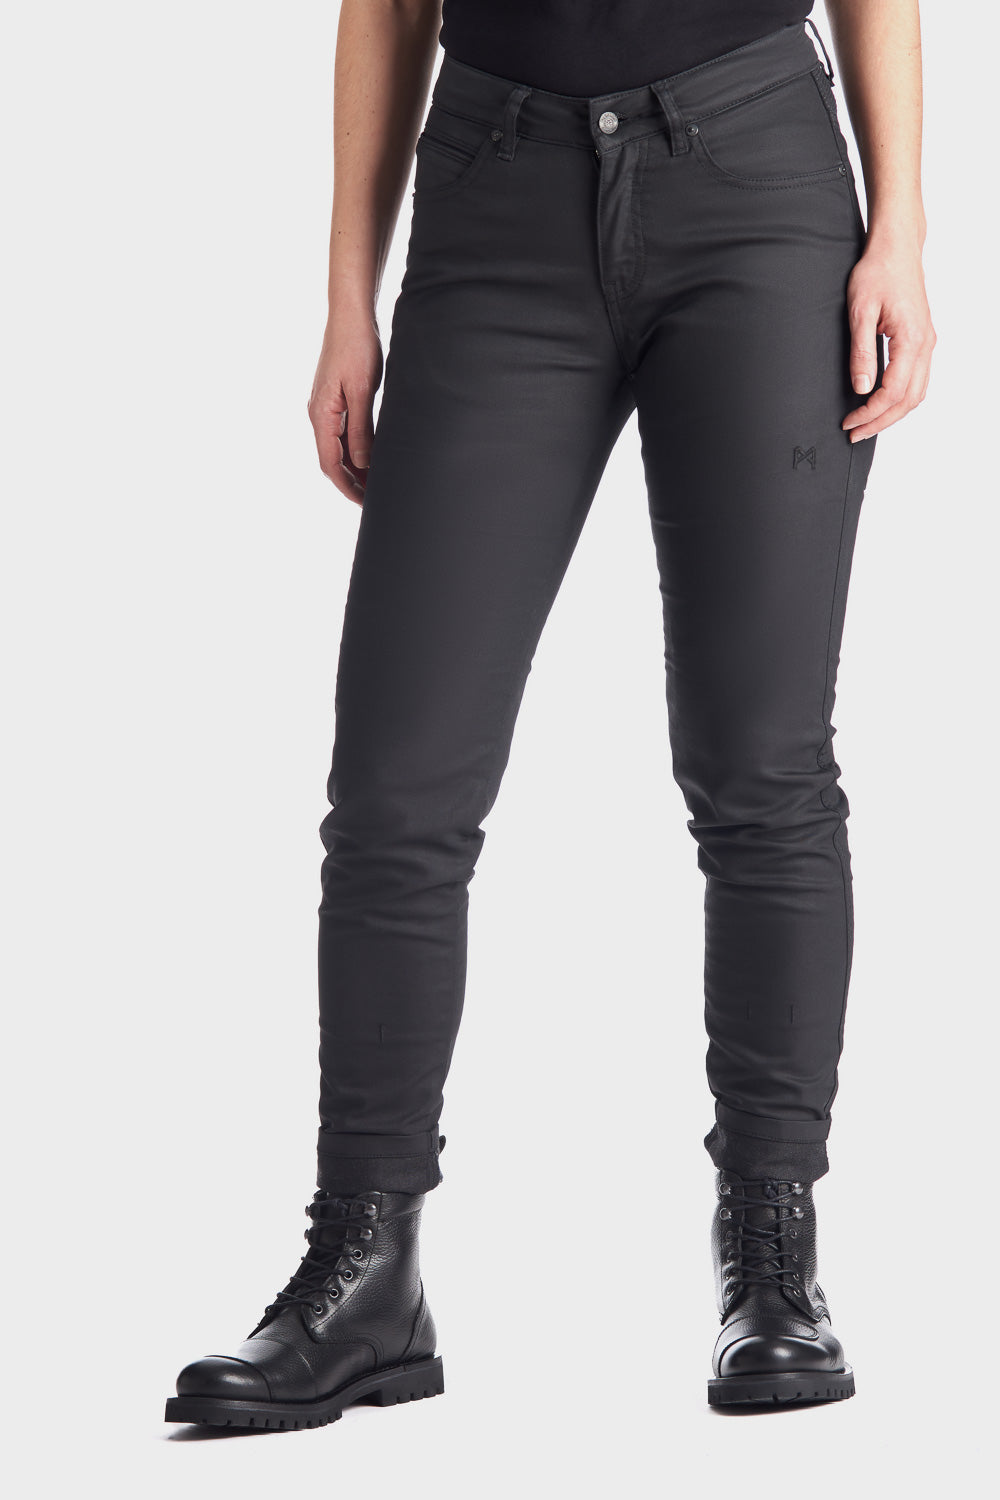 woman&#39;s legs wearing slim-fit motorcycle jeans from Pando Moto 